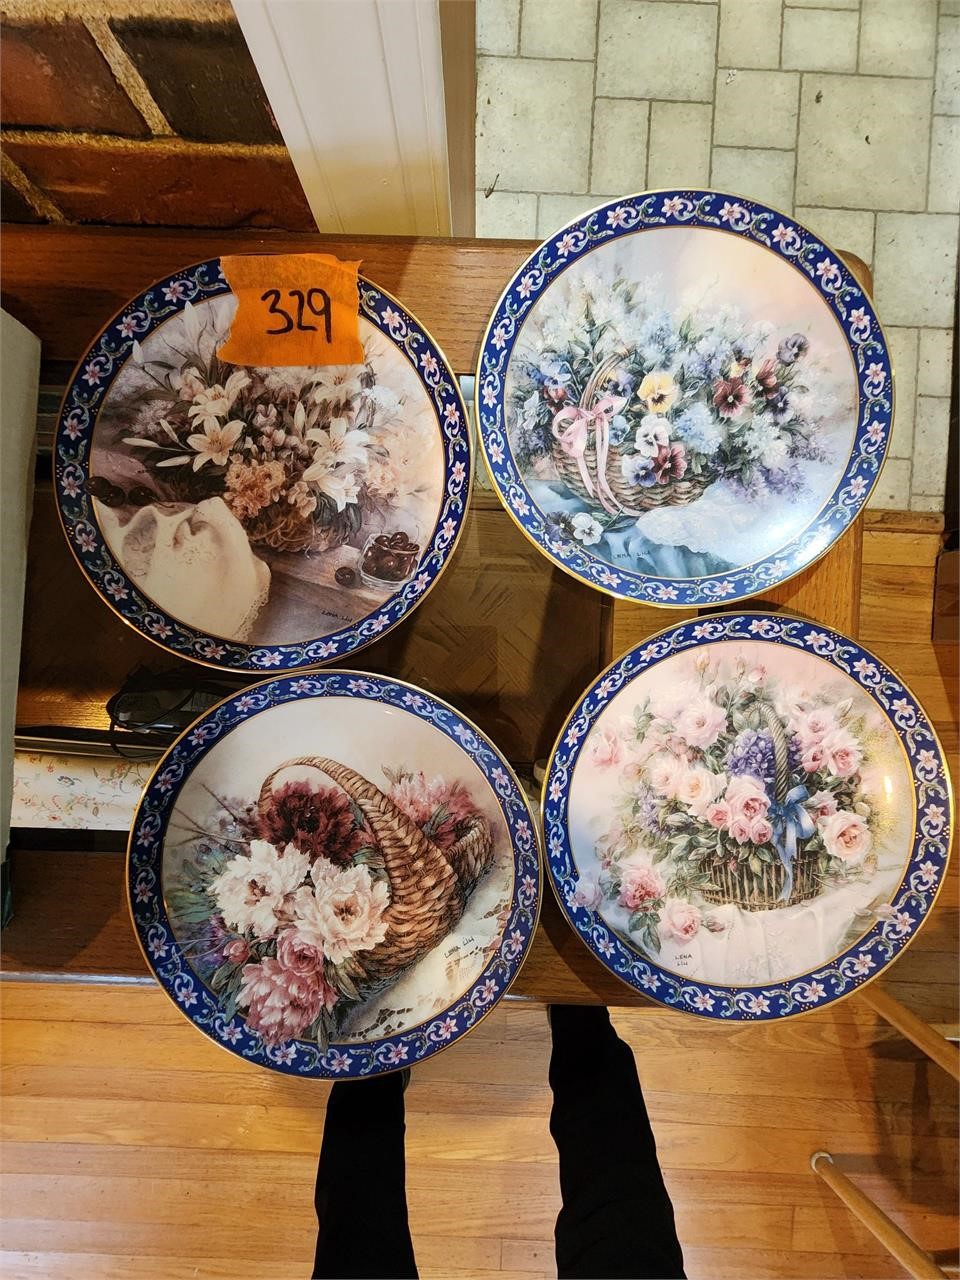 Ornamental plates